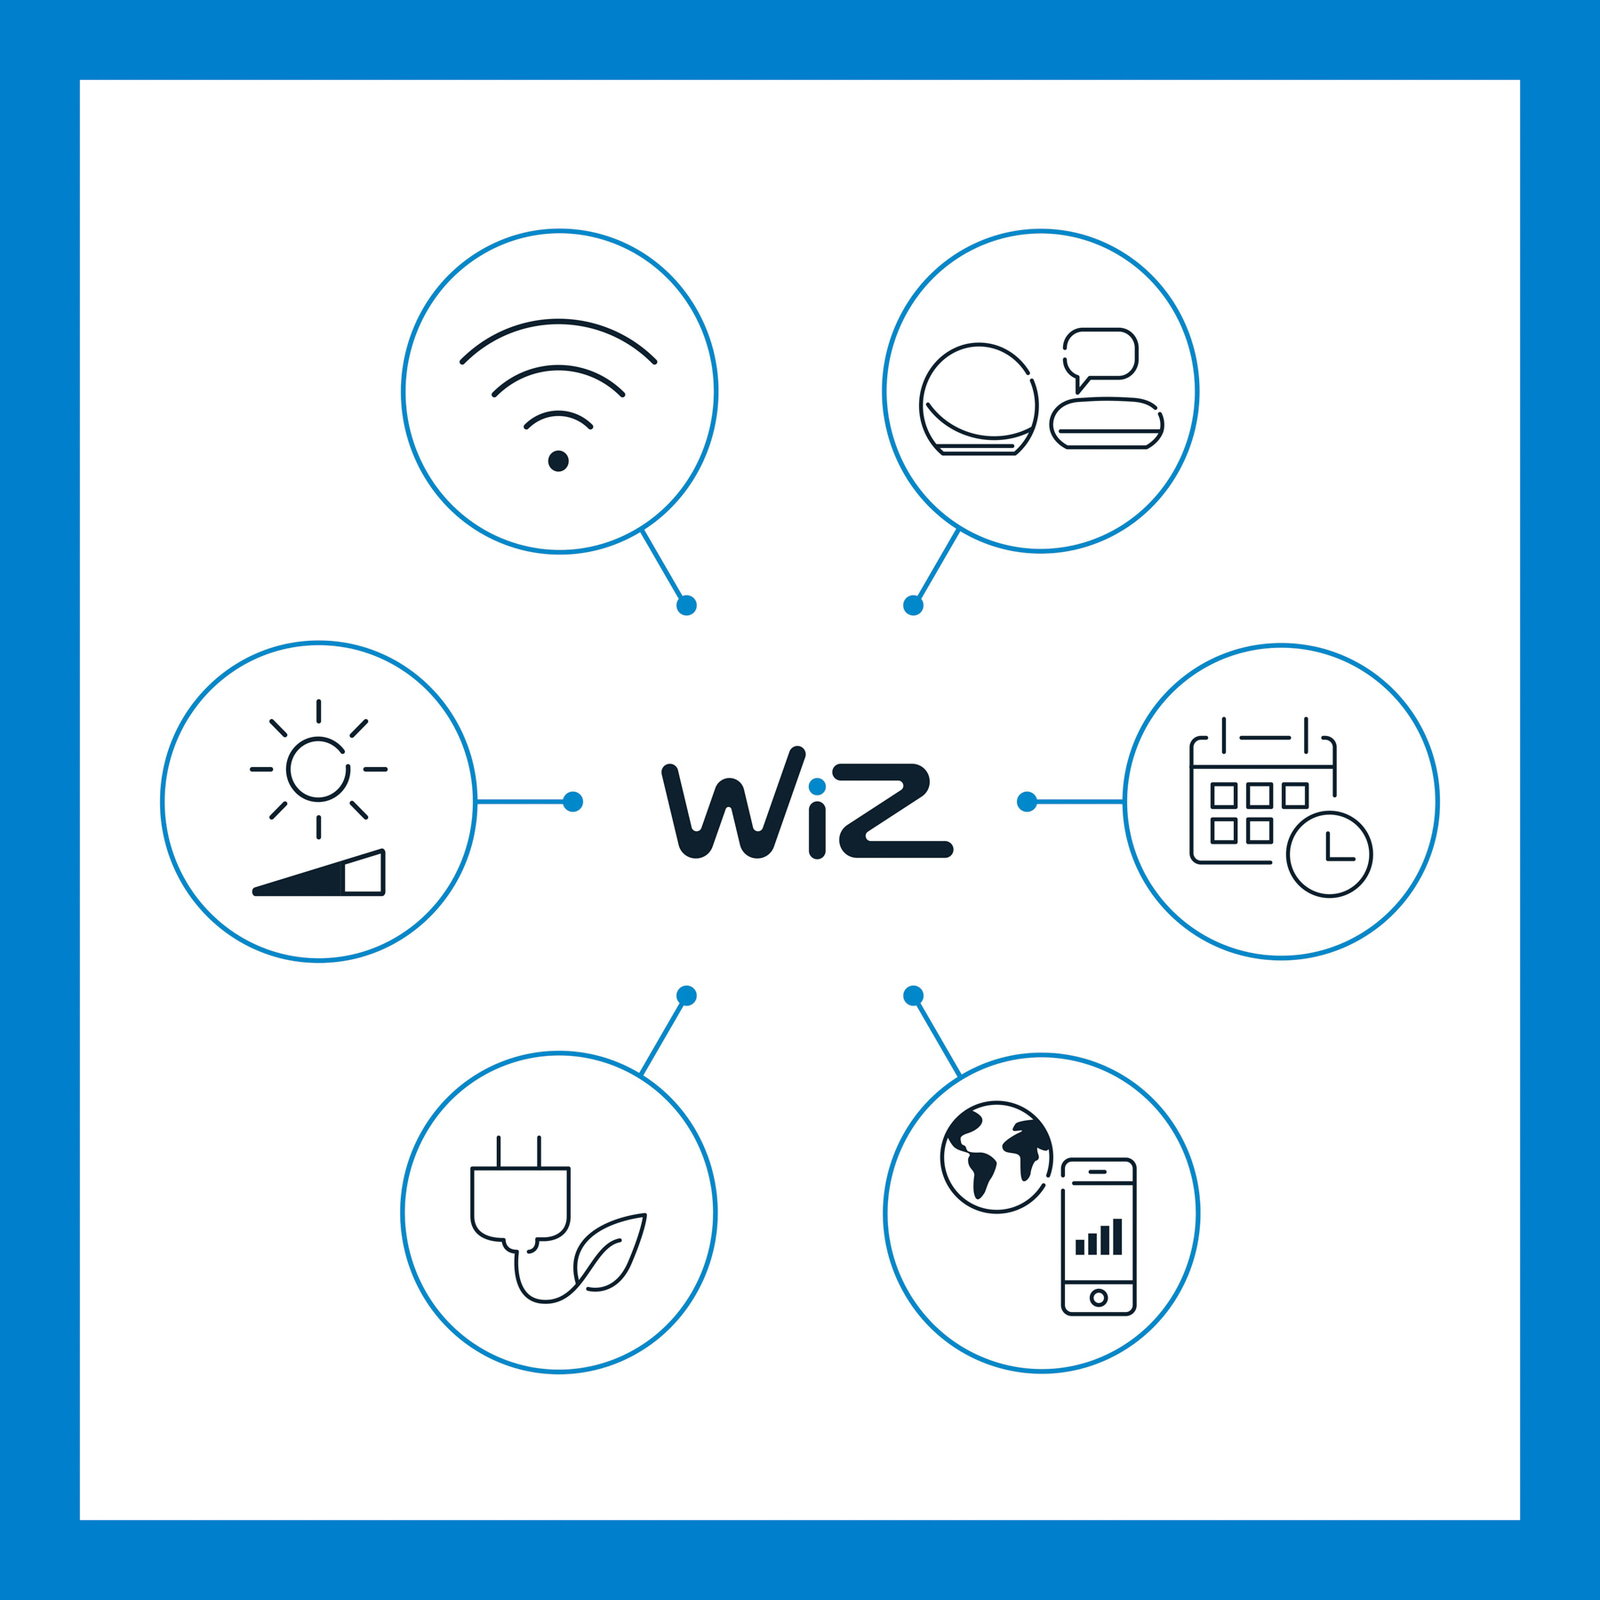 WiZ A60 LED žárovka Wi-Fi E27 7W CCT